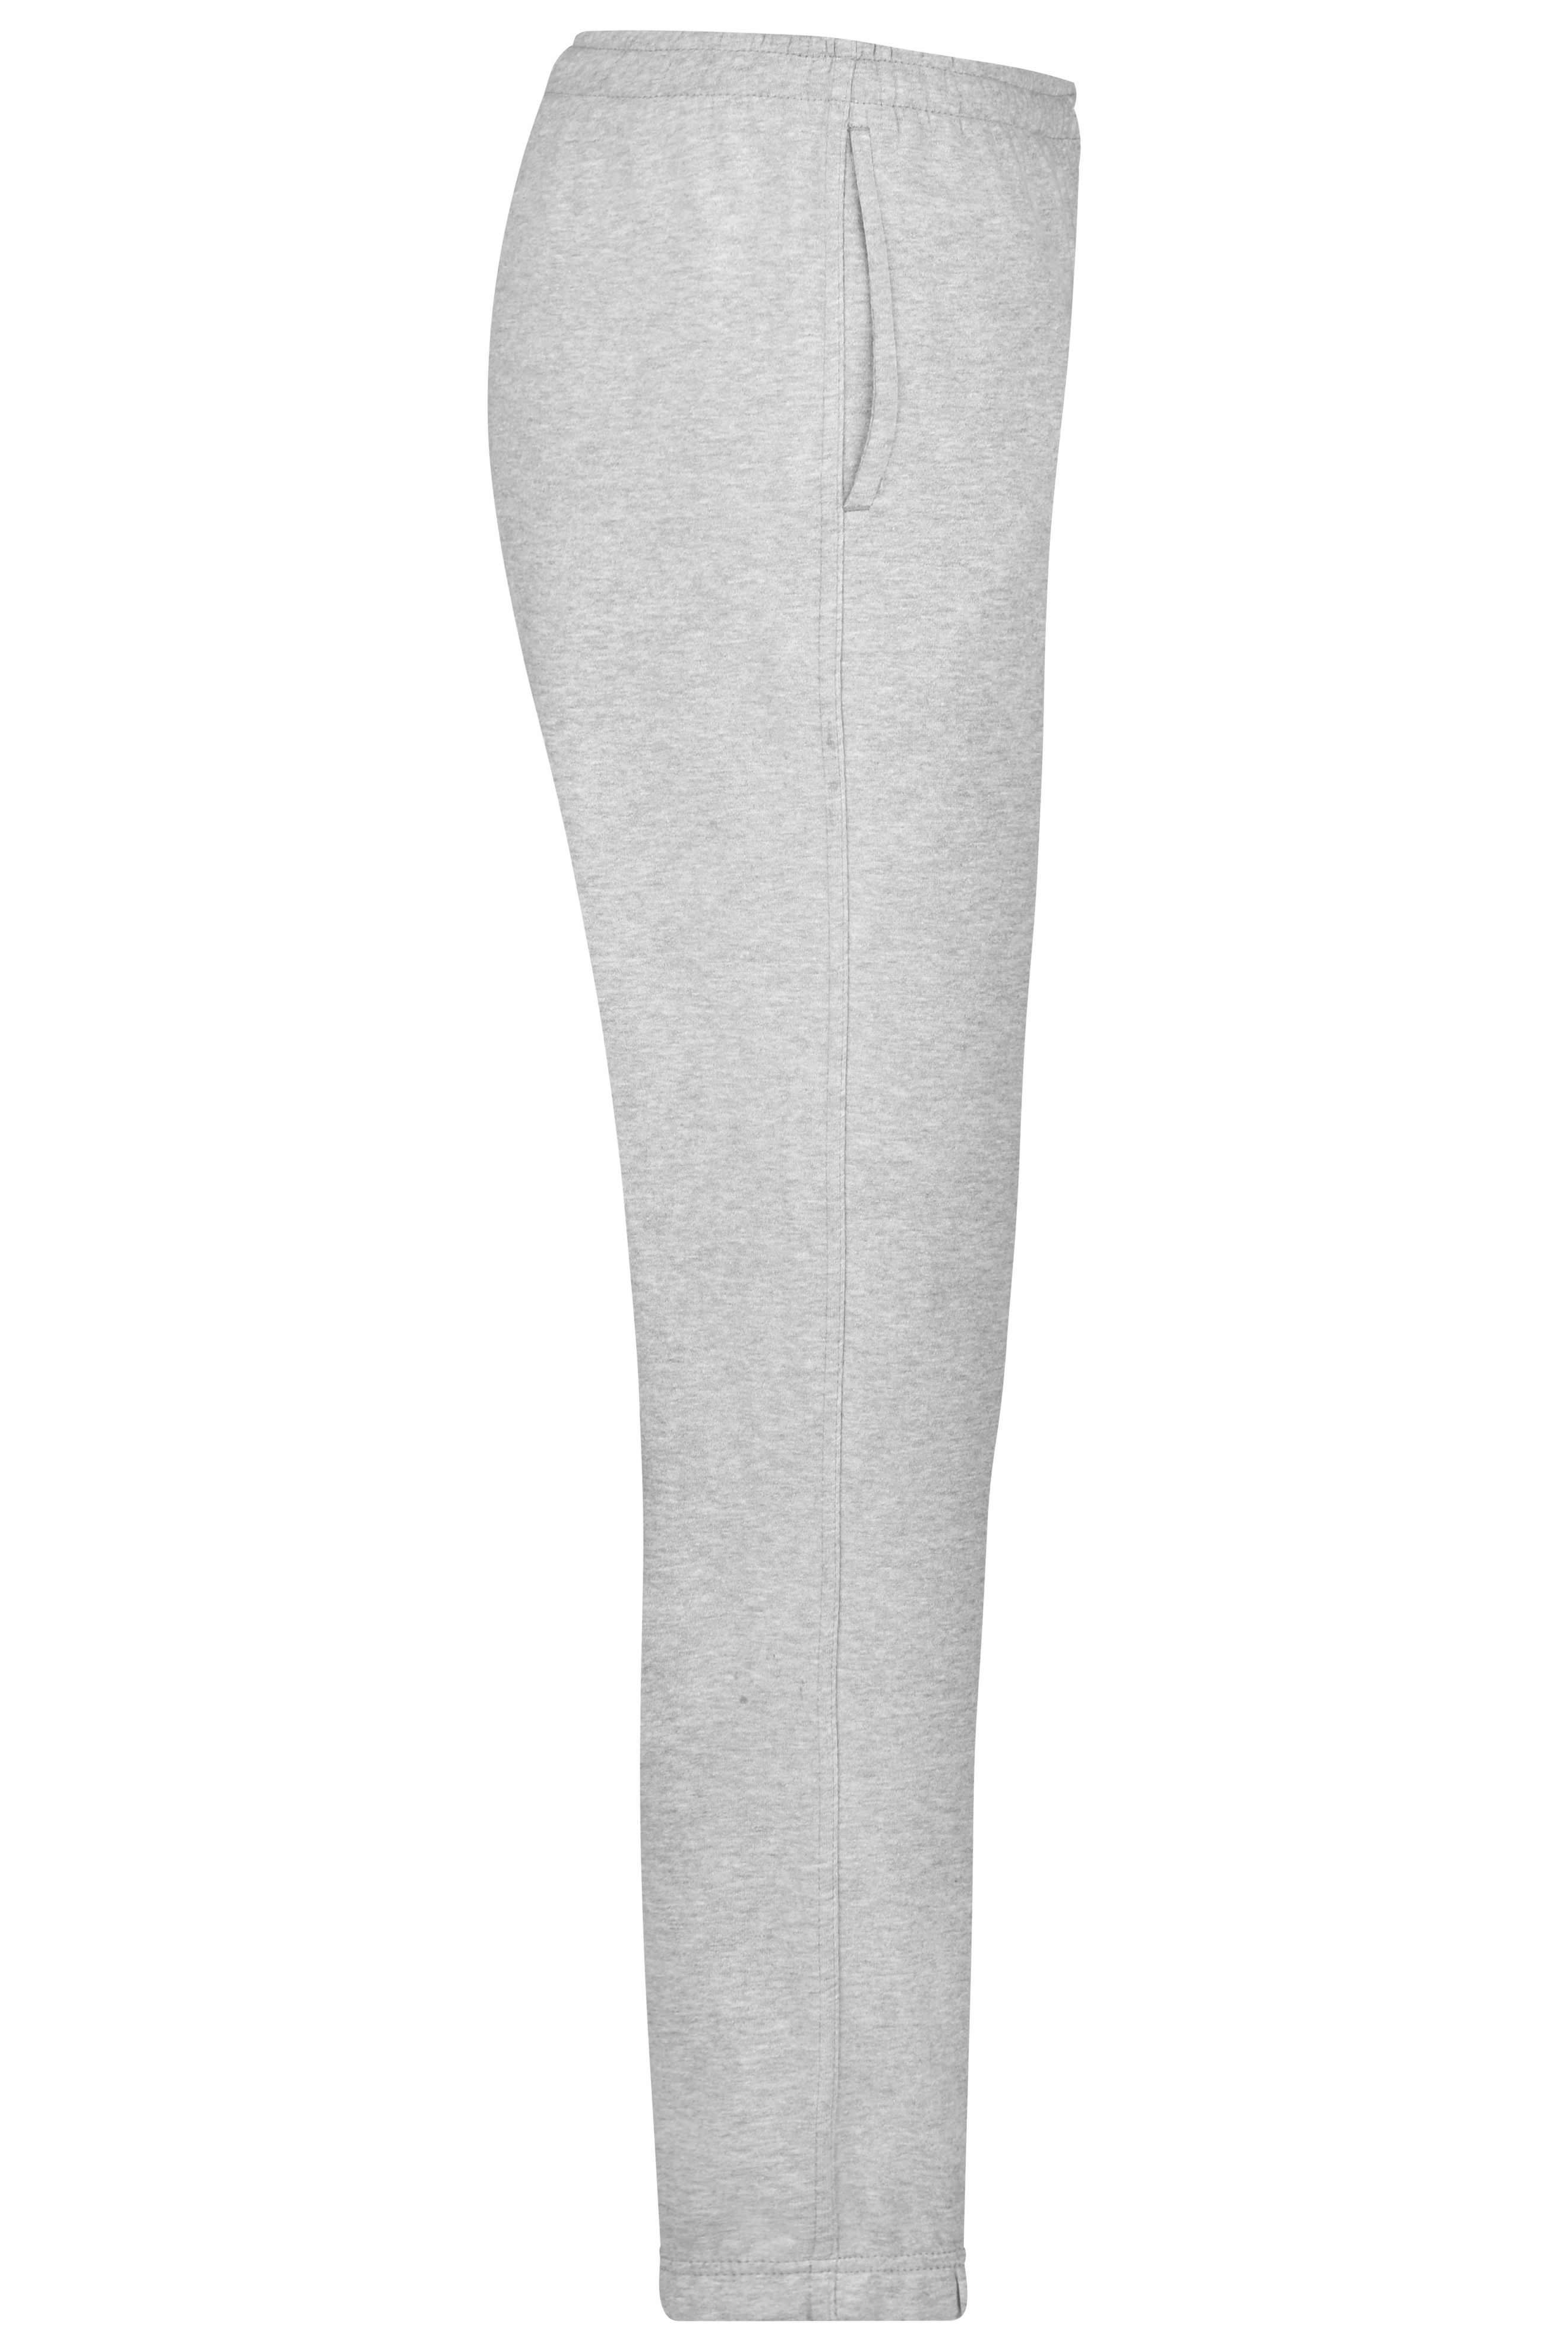 Ladies Ladies' Jogging Pants Grey-heather-Daiber